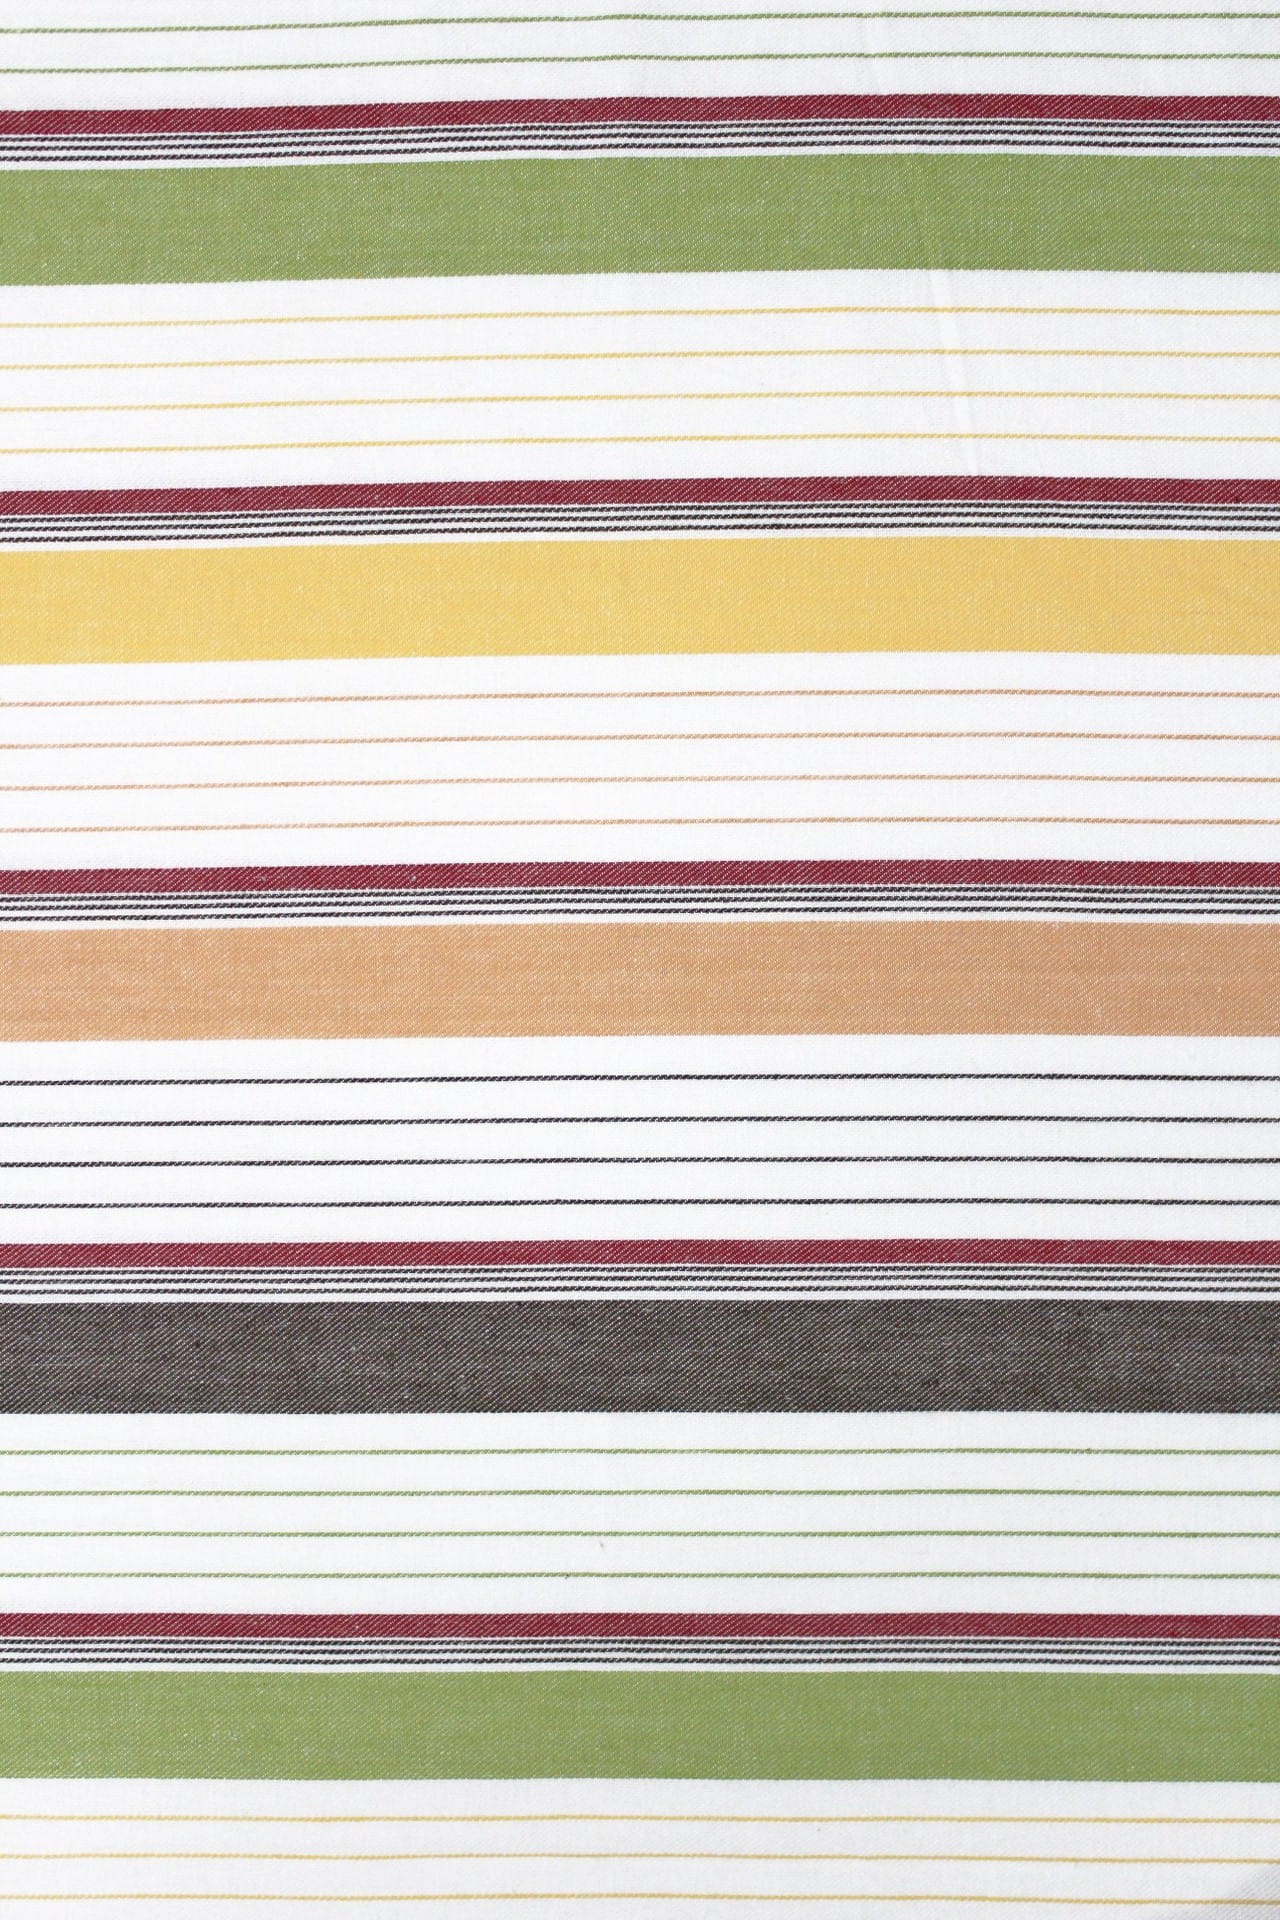 Soft Stripe Print Mercerised Woven Cotton Diwan Set(6 Pcs) online in India